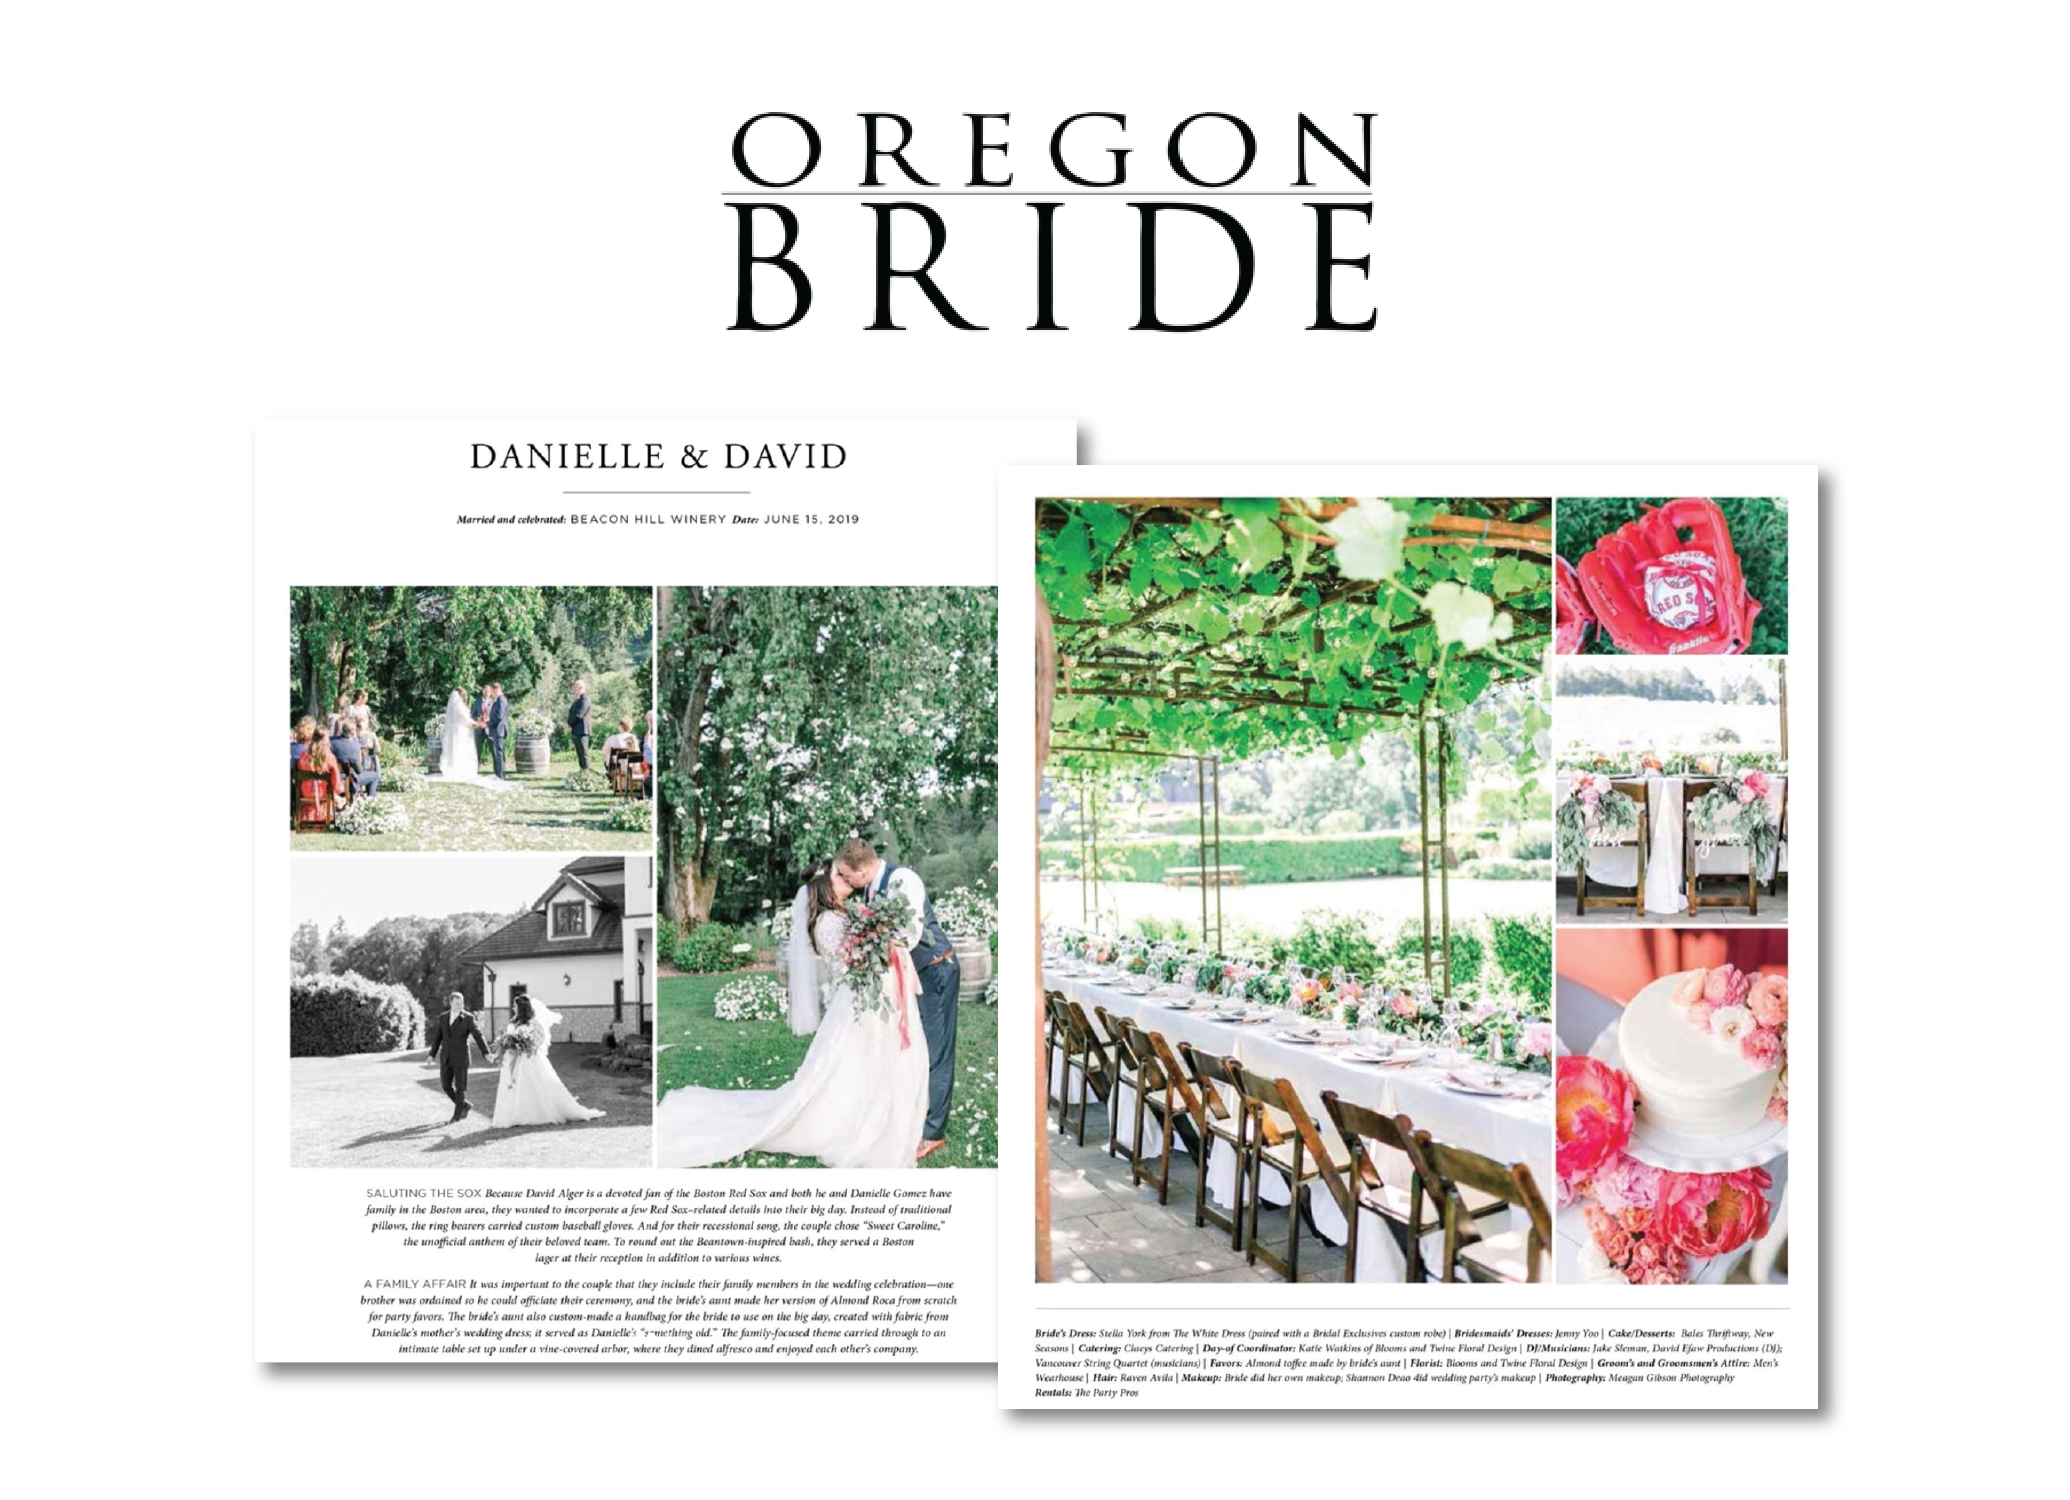 The Beacon Hill Cabin — Beacon Hill Winery & Vineyard